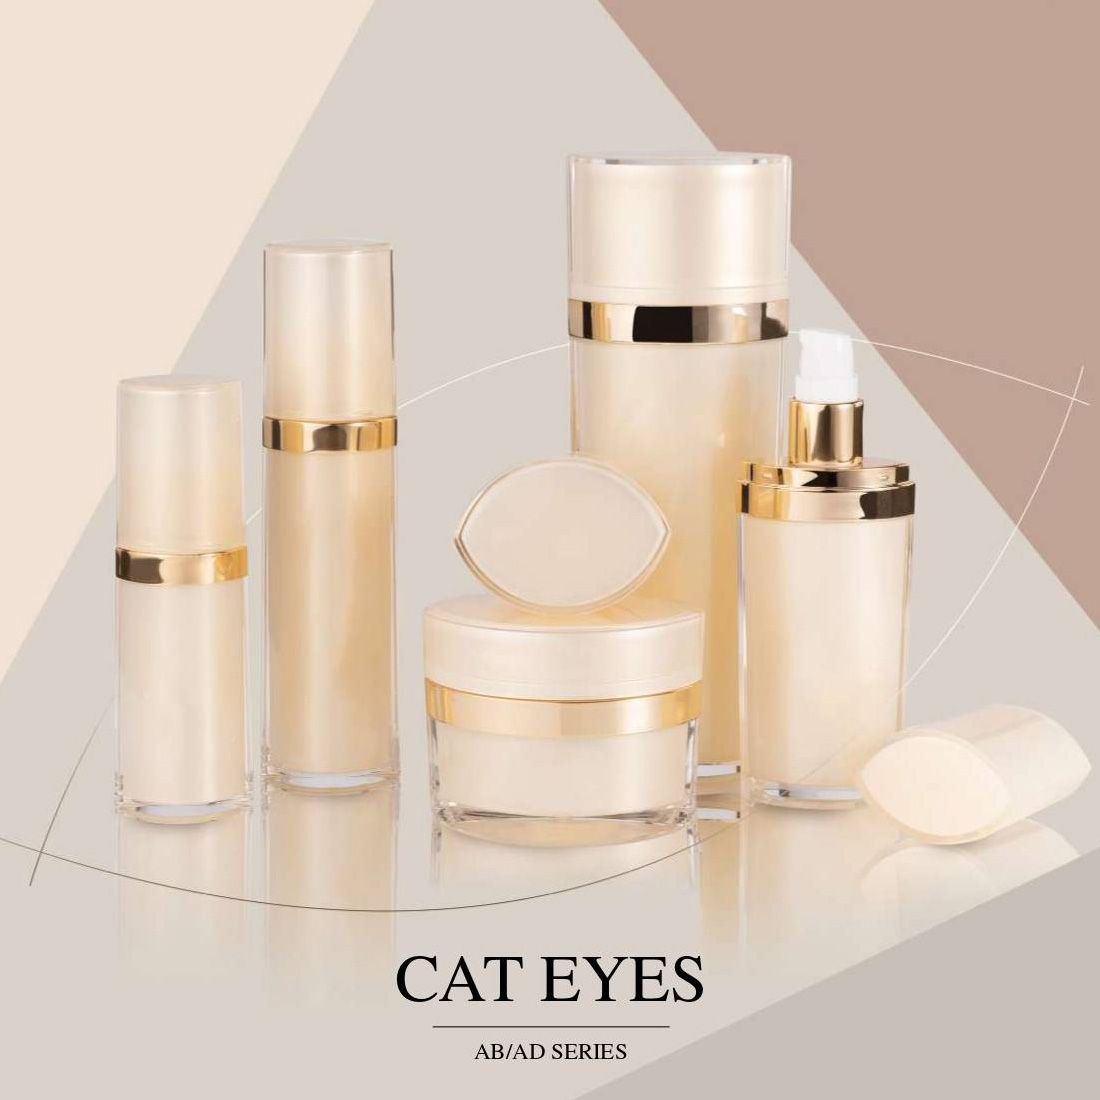 COSJAR cometic container design - Cat eyes series